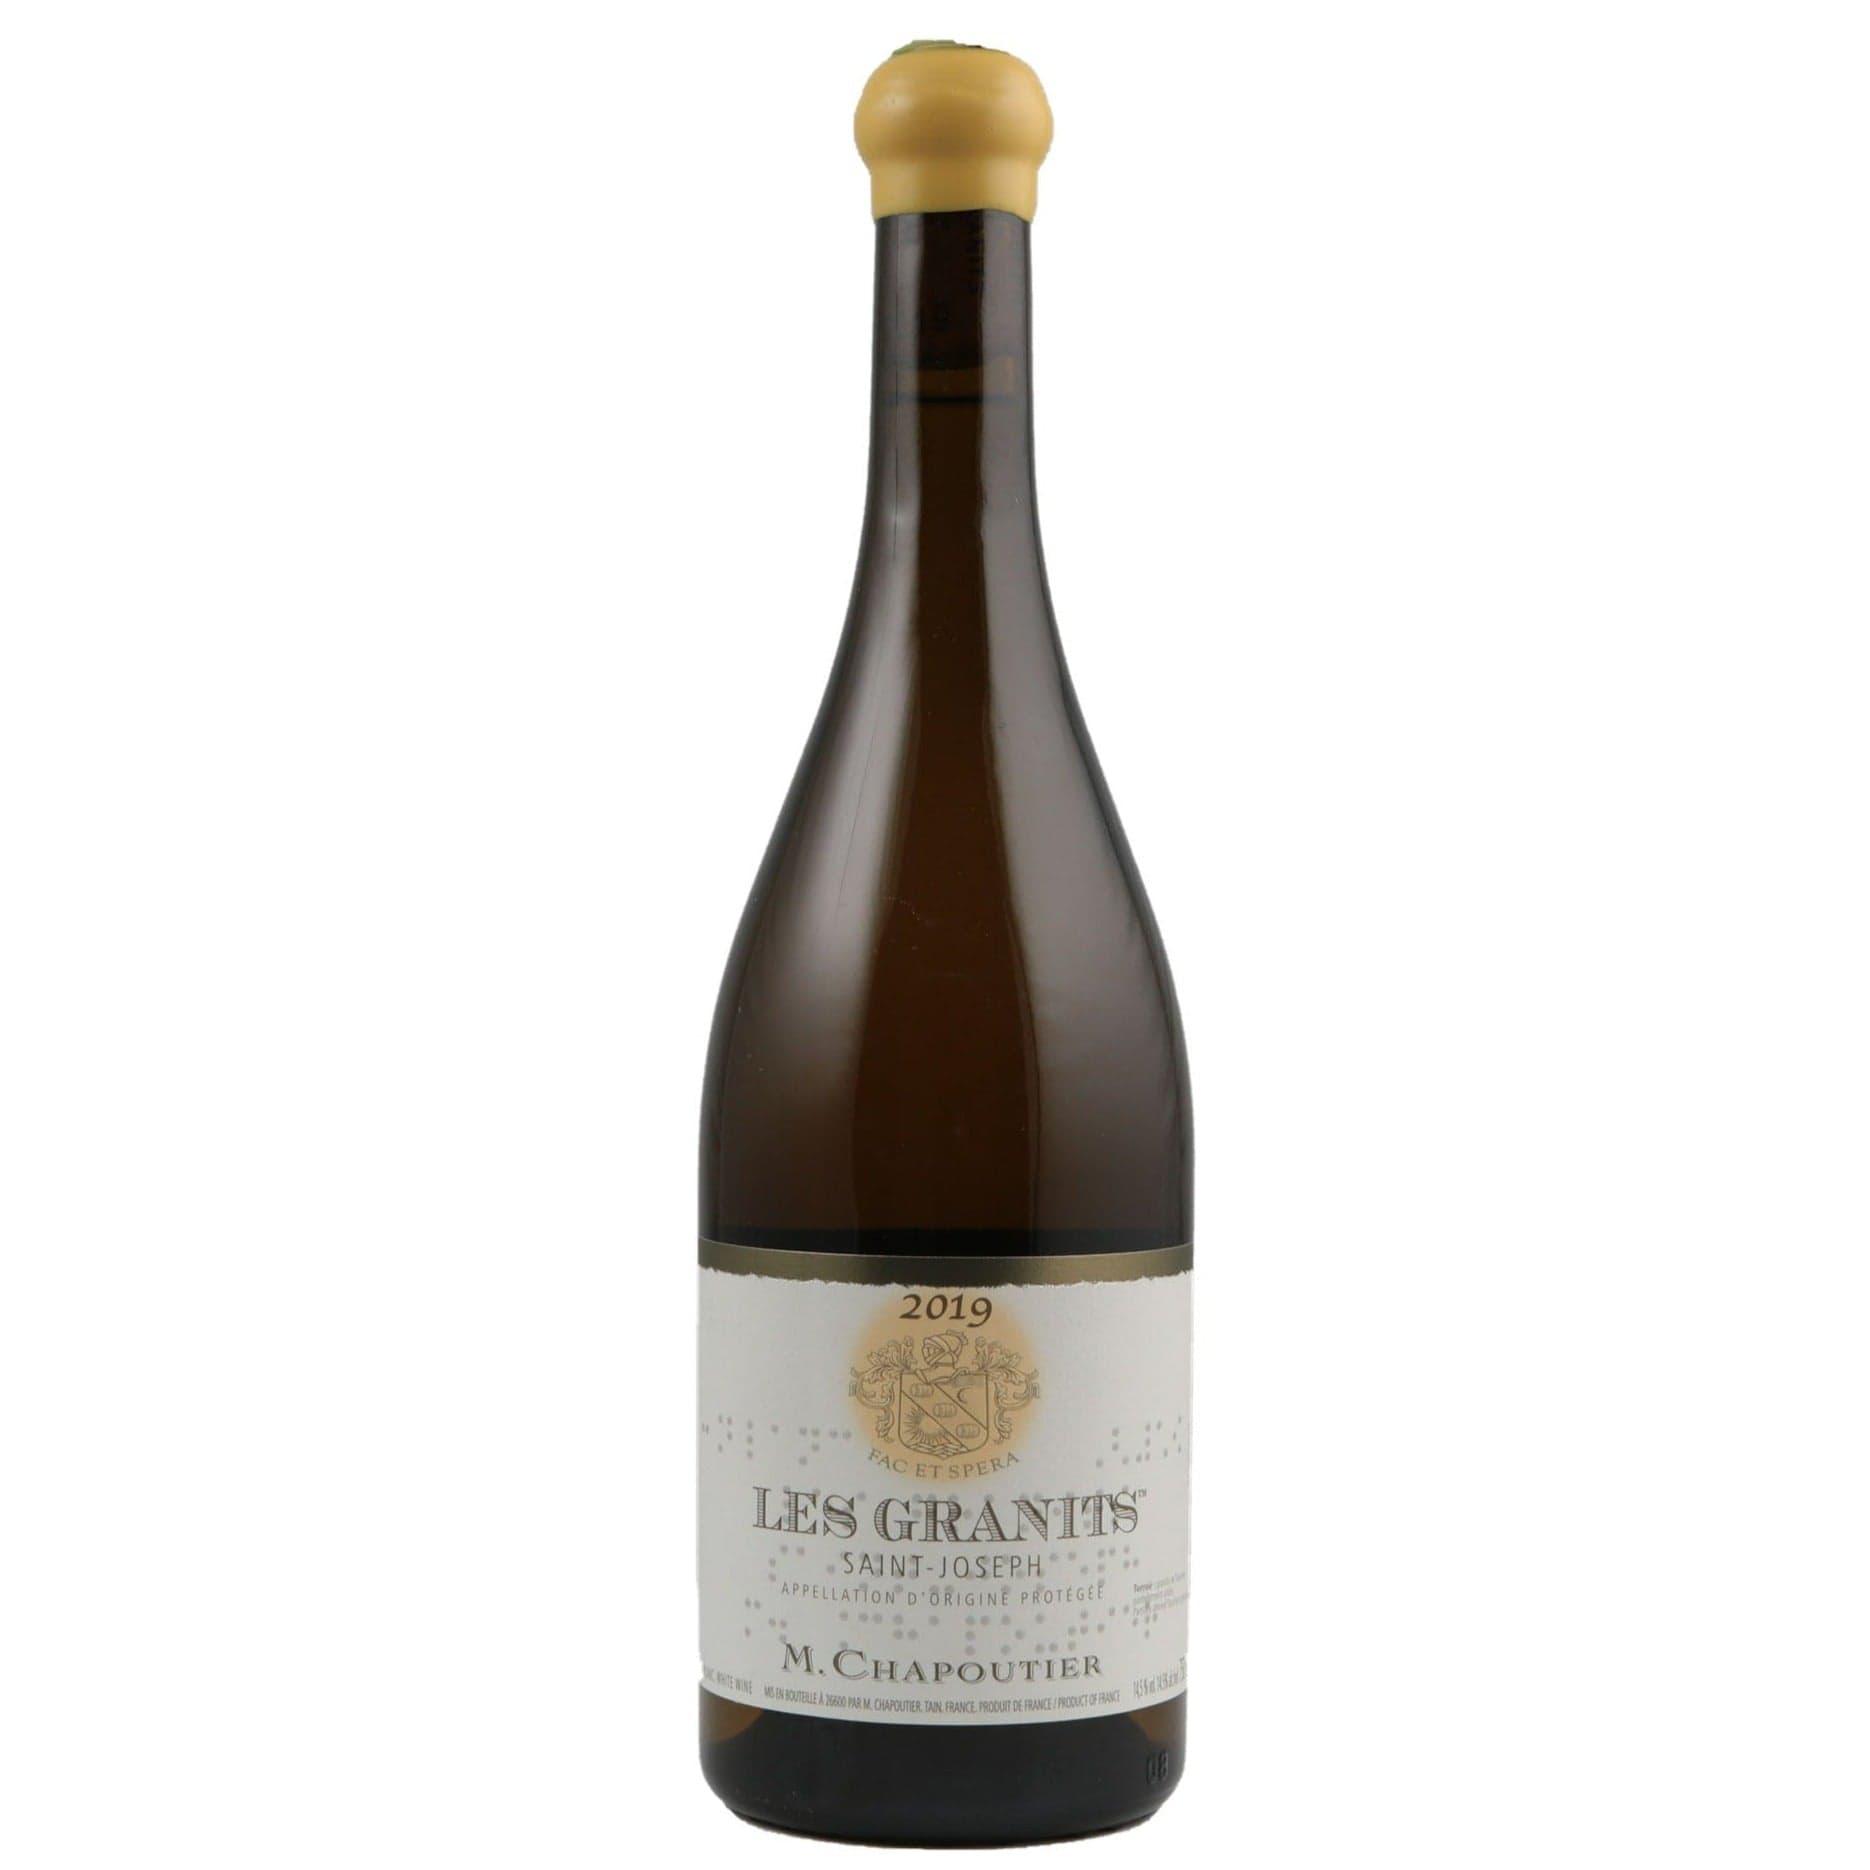 Single bottle of White wine M. Chapoutier, Les Granits Blanc, Saint Joseph, 2019 100% Marsanne